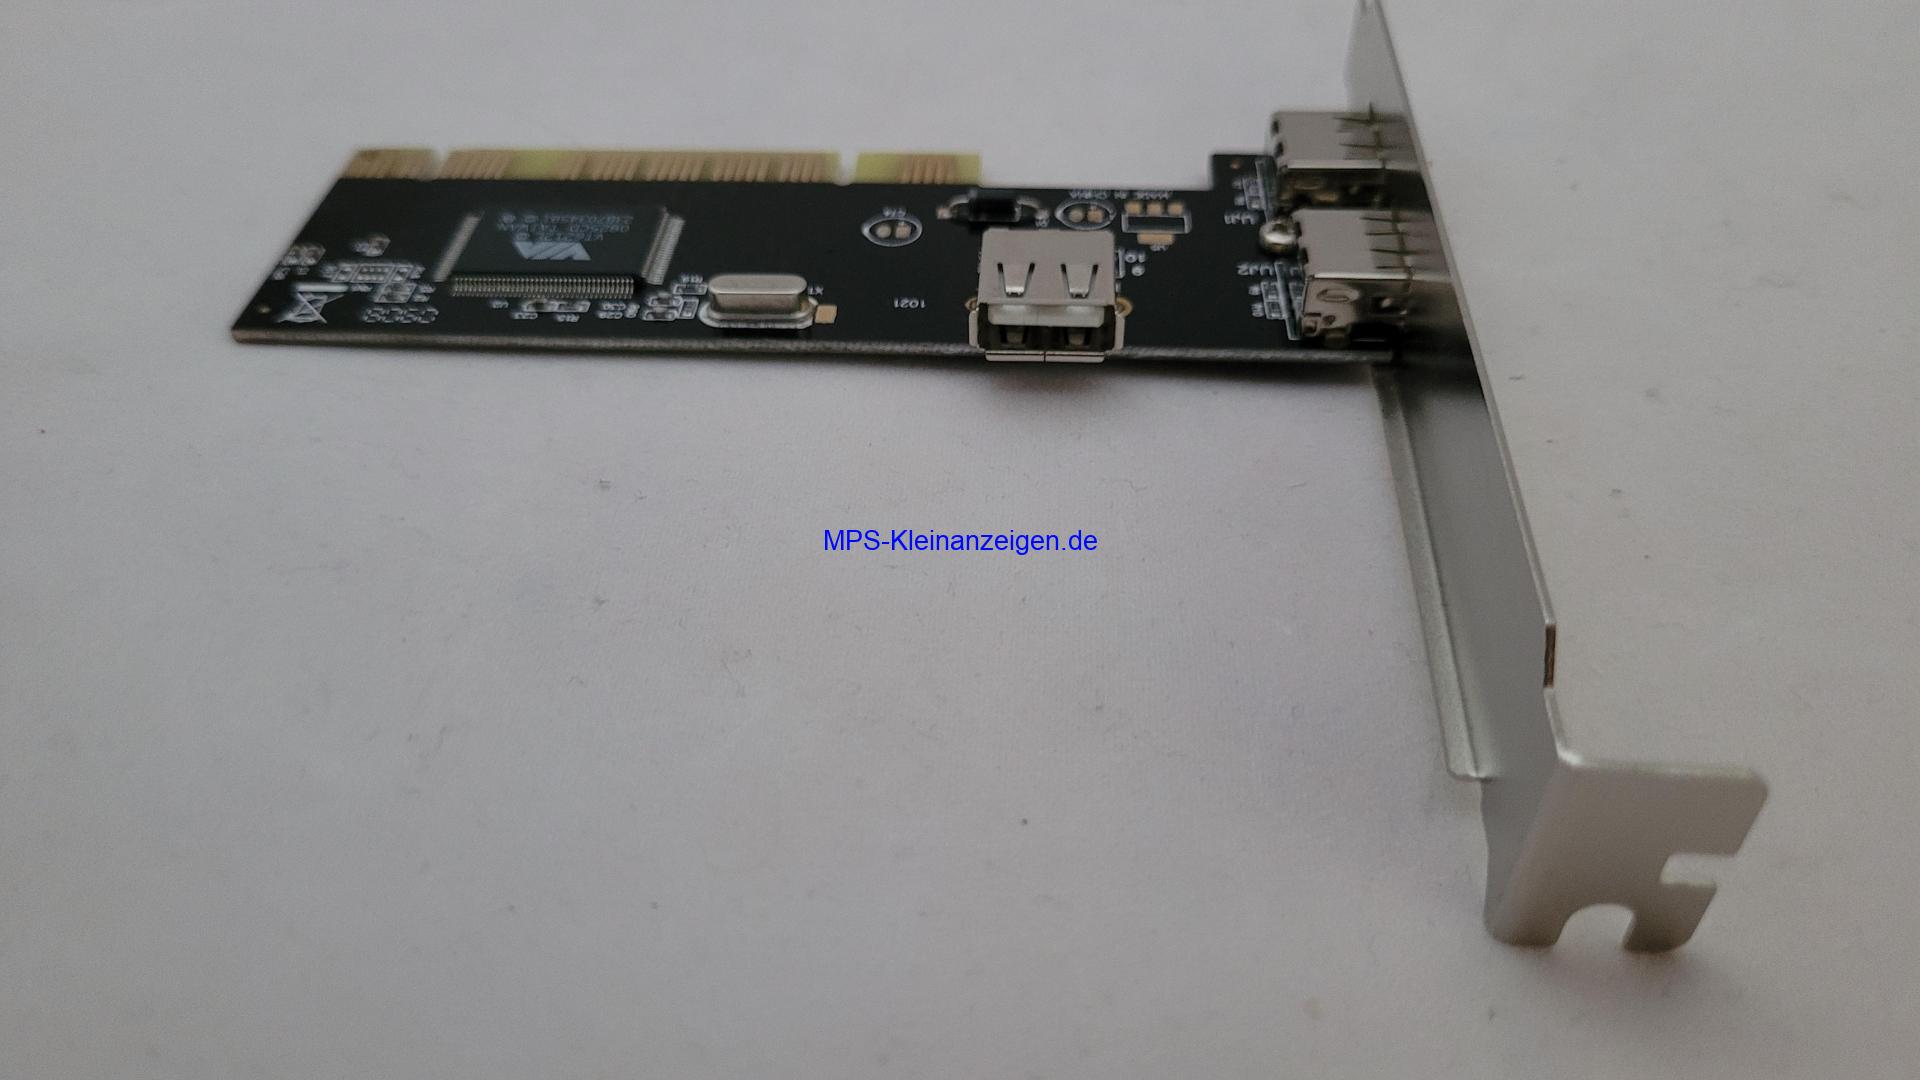 VIA Vectro VT6212L PCI USB 2.0 UHCI / 2-Port-Host-Controller - 3